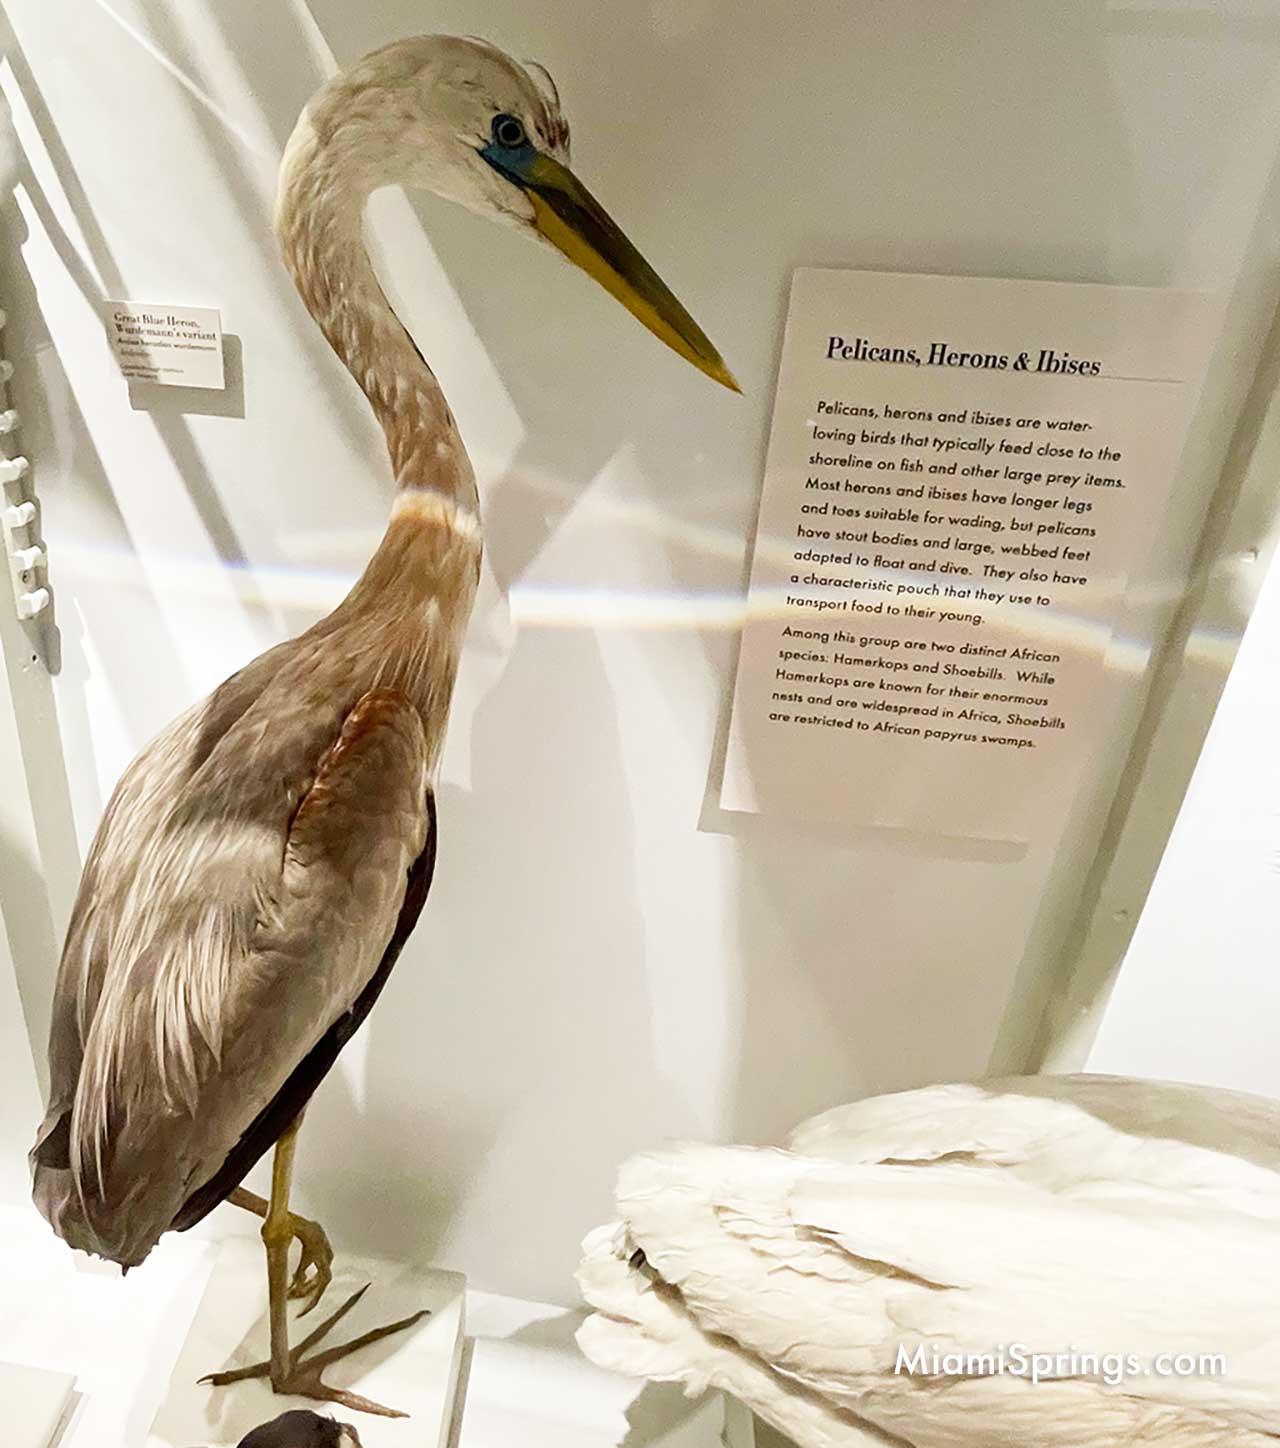 Heron displayed at the Harvard Museum of Natural History